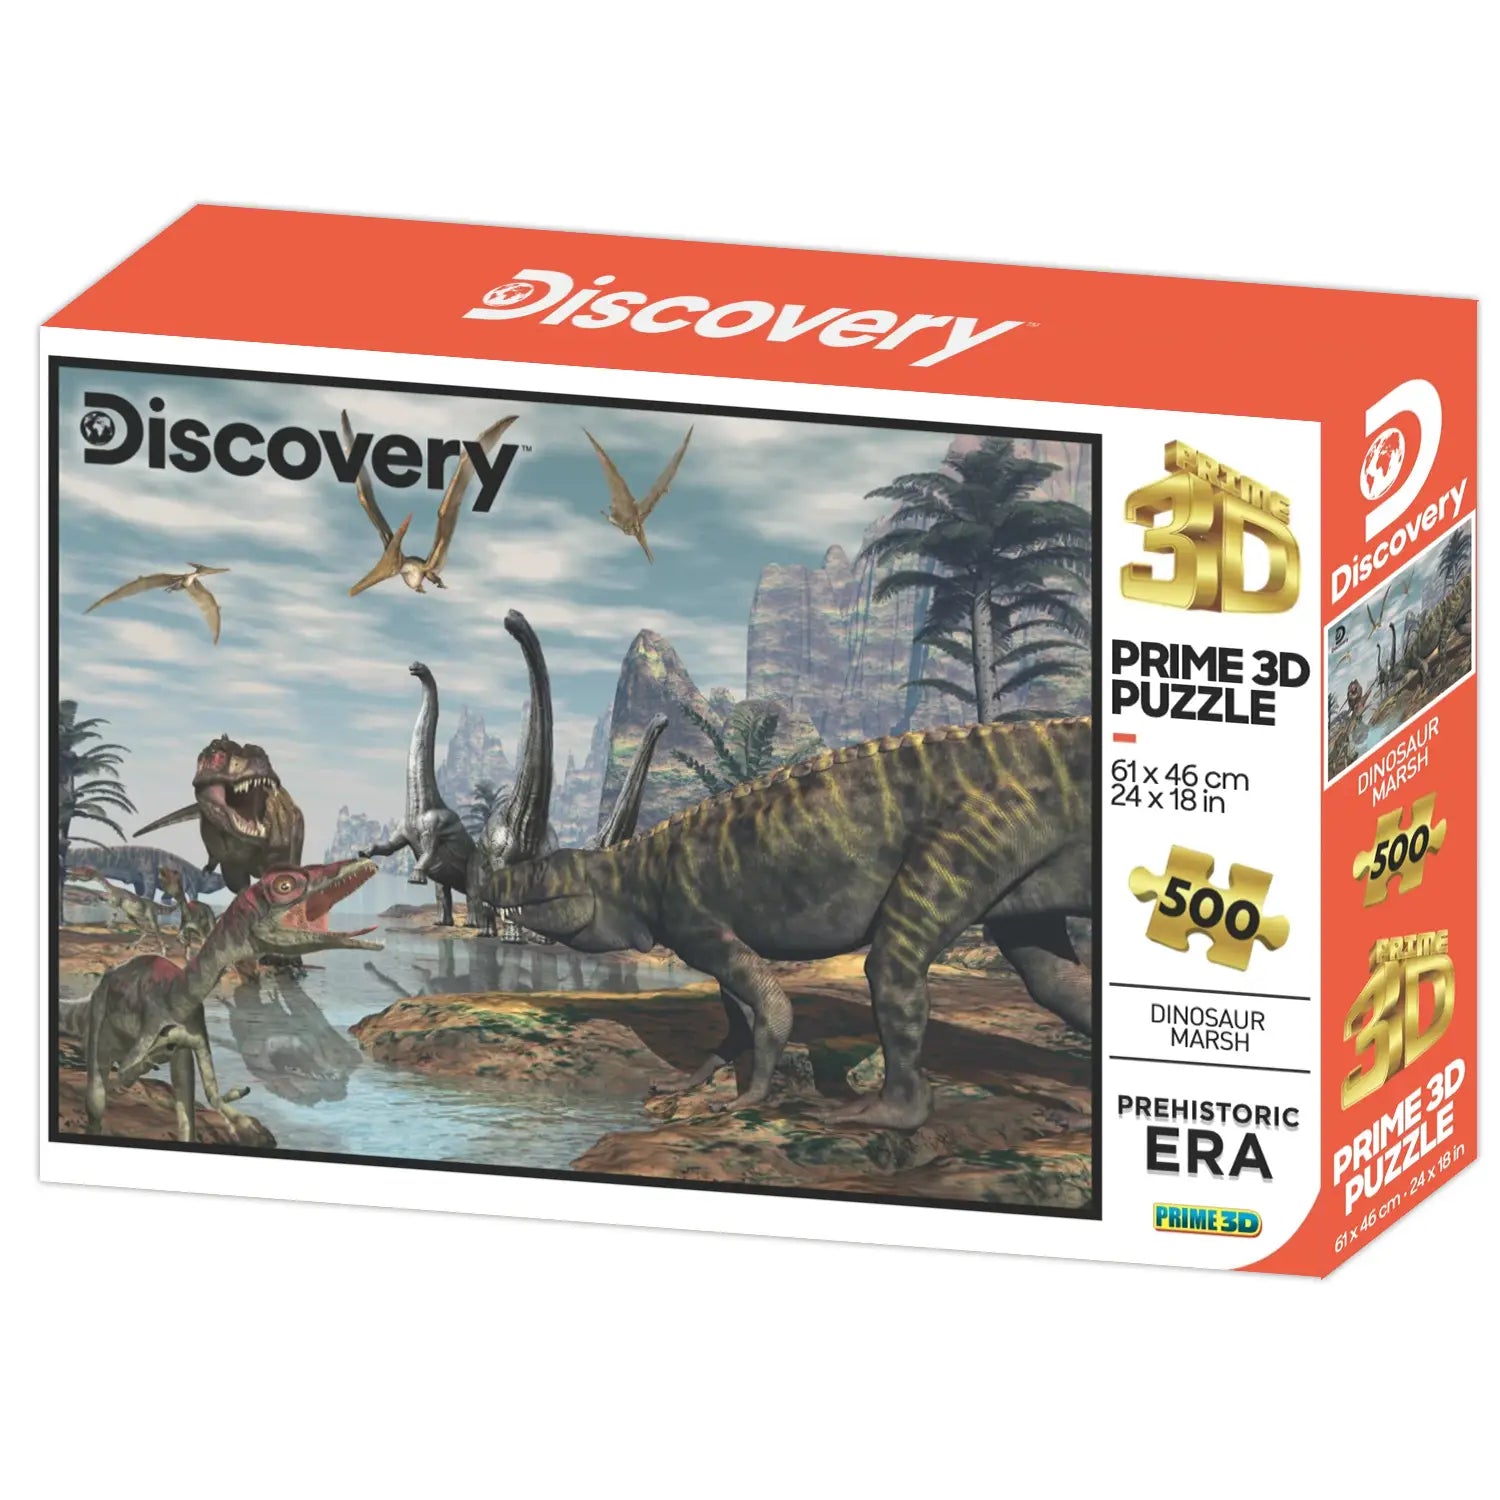 Prime 3D Discovery Dinosaur Marsh 500 Piece Jigsaw Puzzle